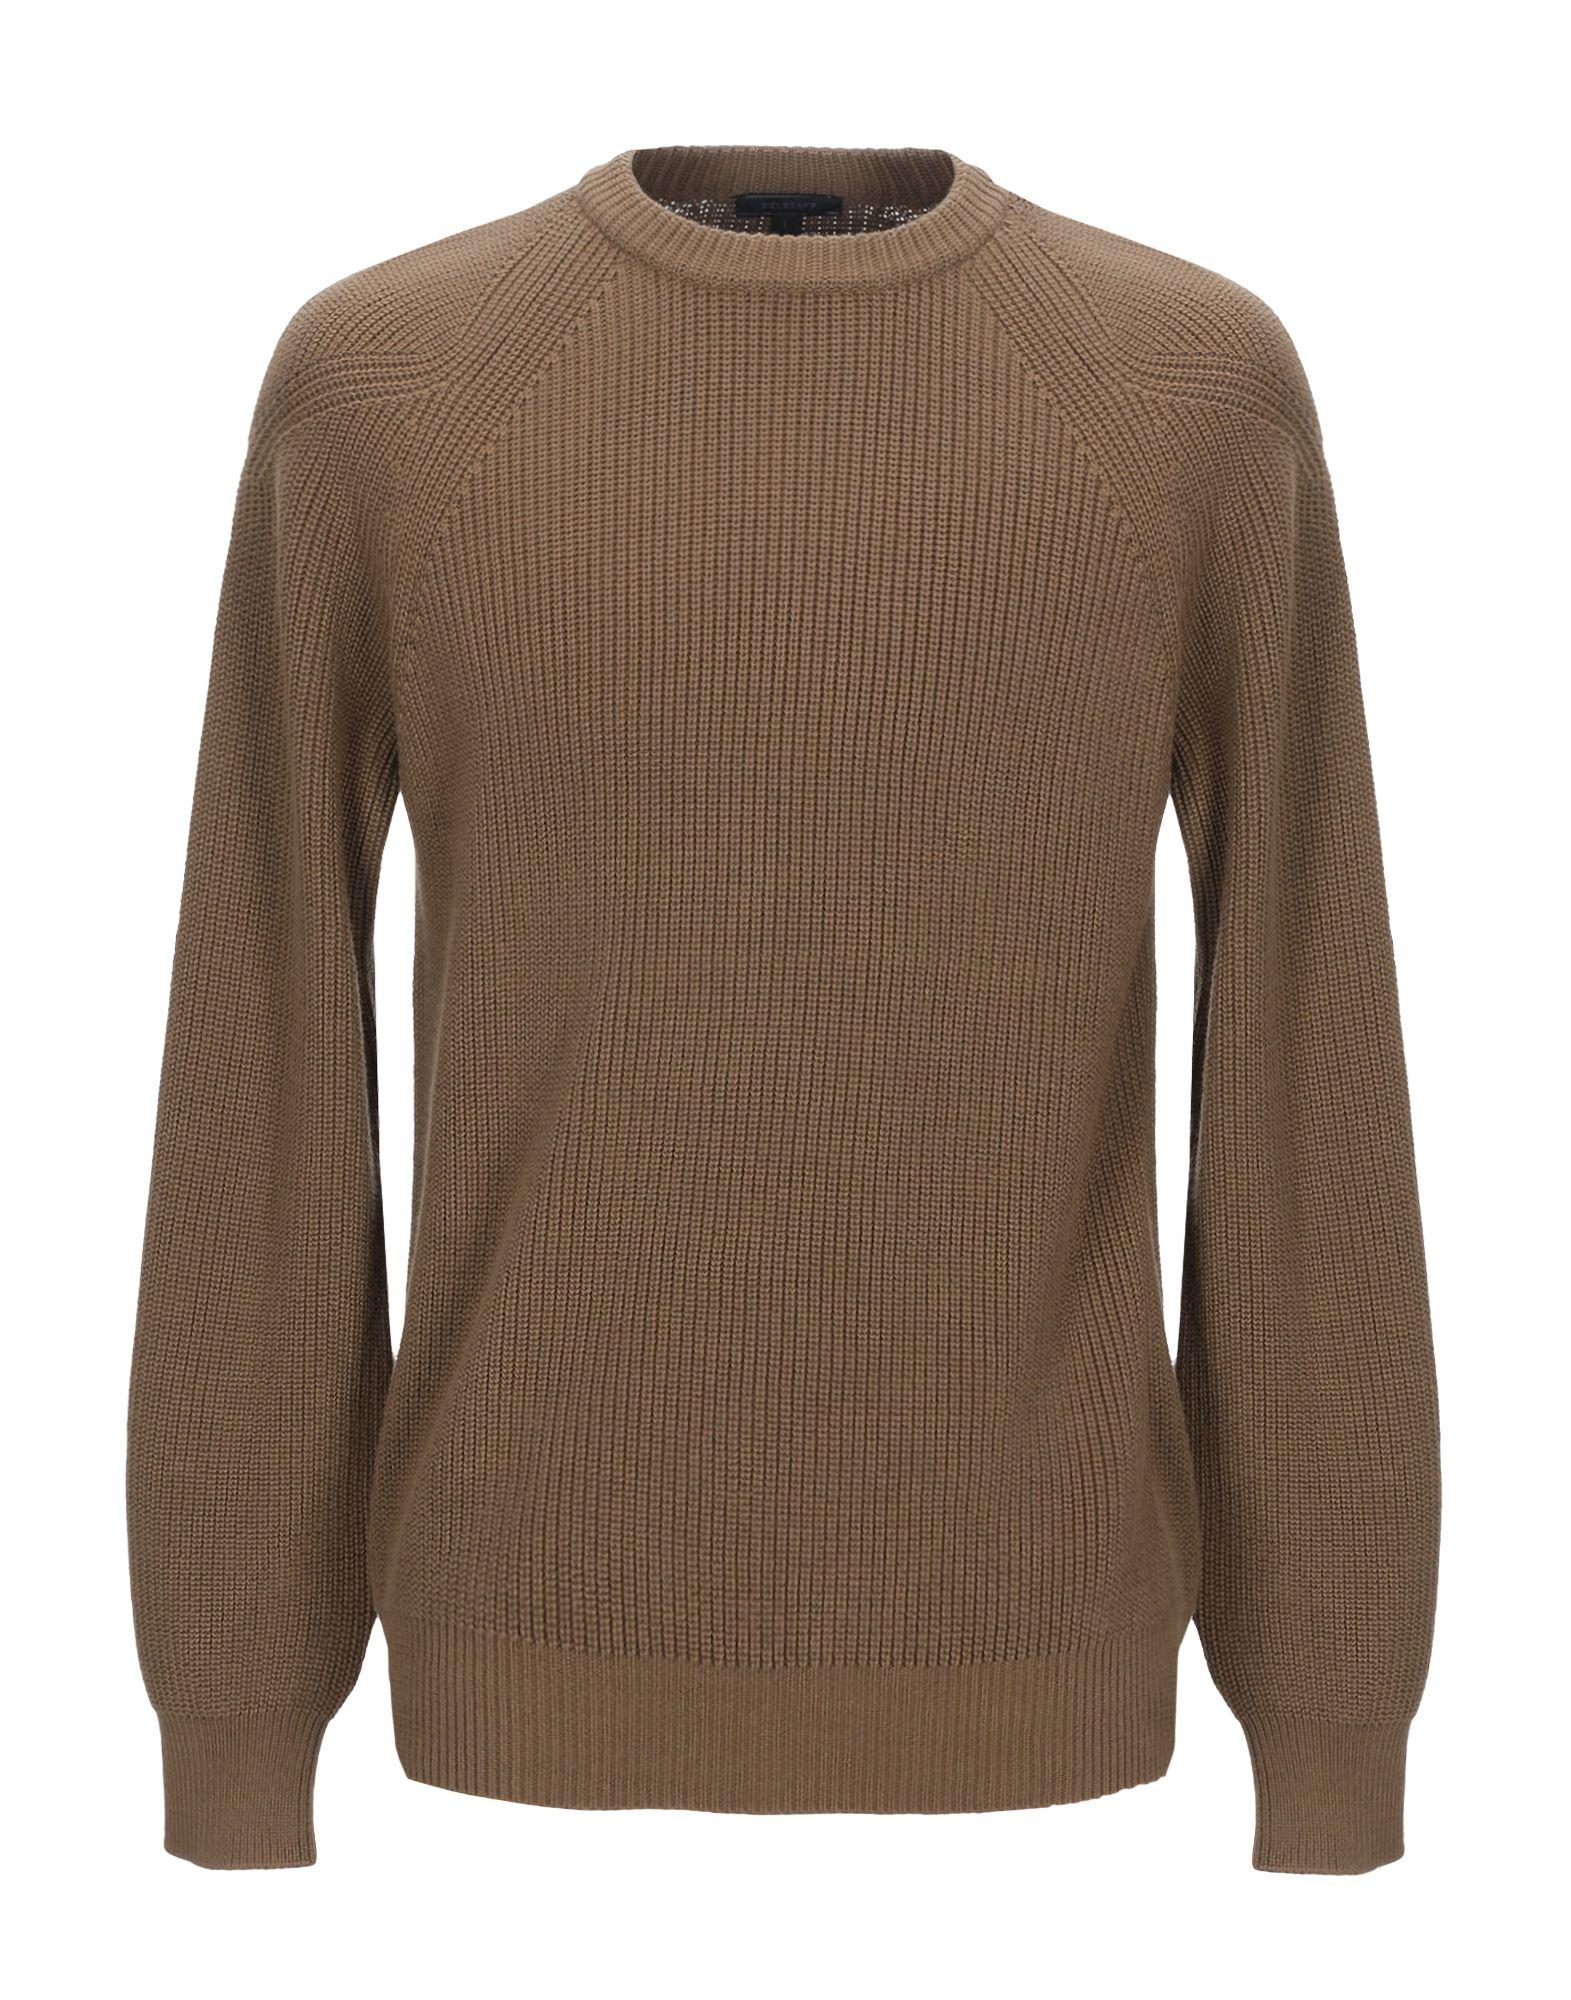 Belstaff Sweater in Brown for Men - Lyst